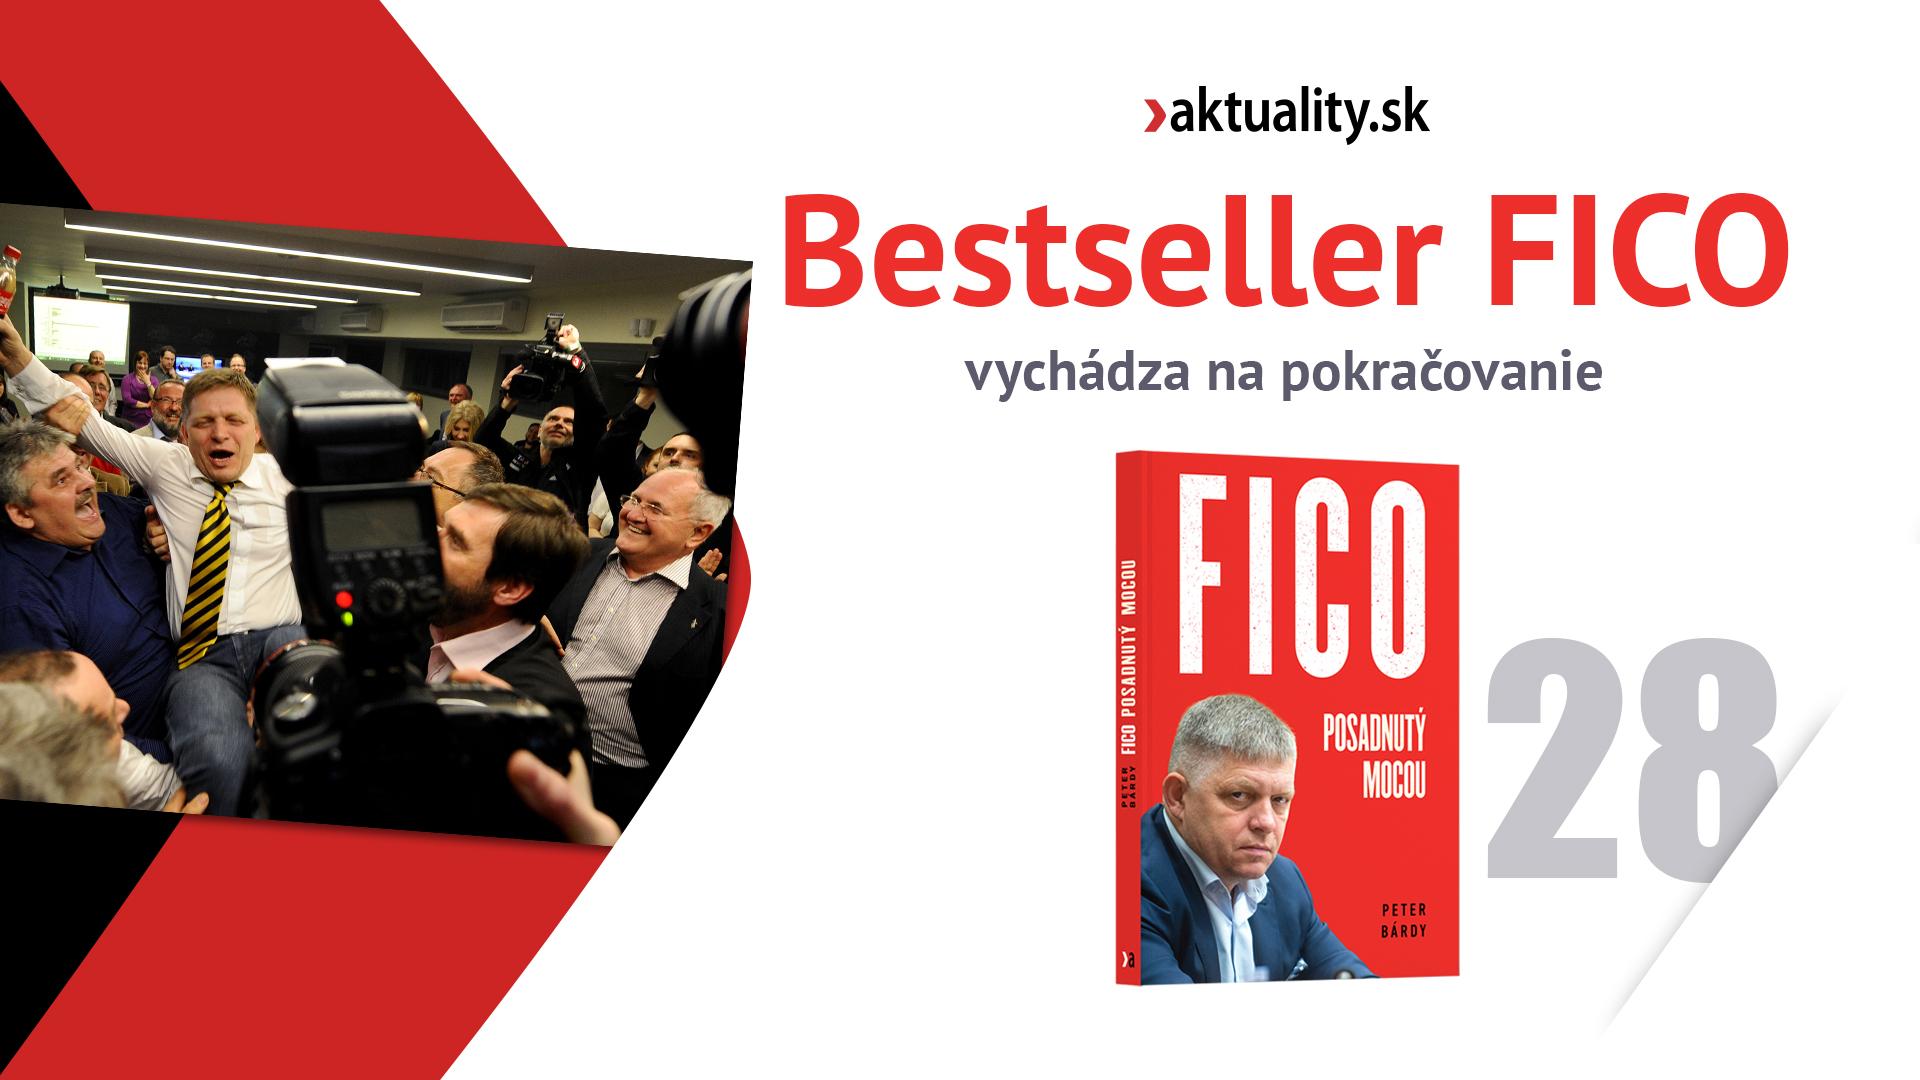 Bestseller Fico – Posadnutý mocou 28